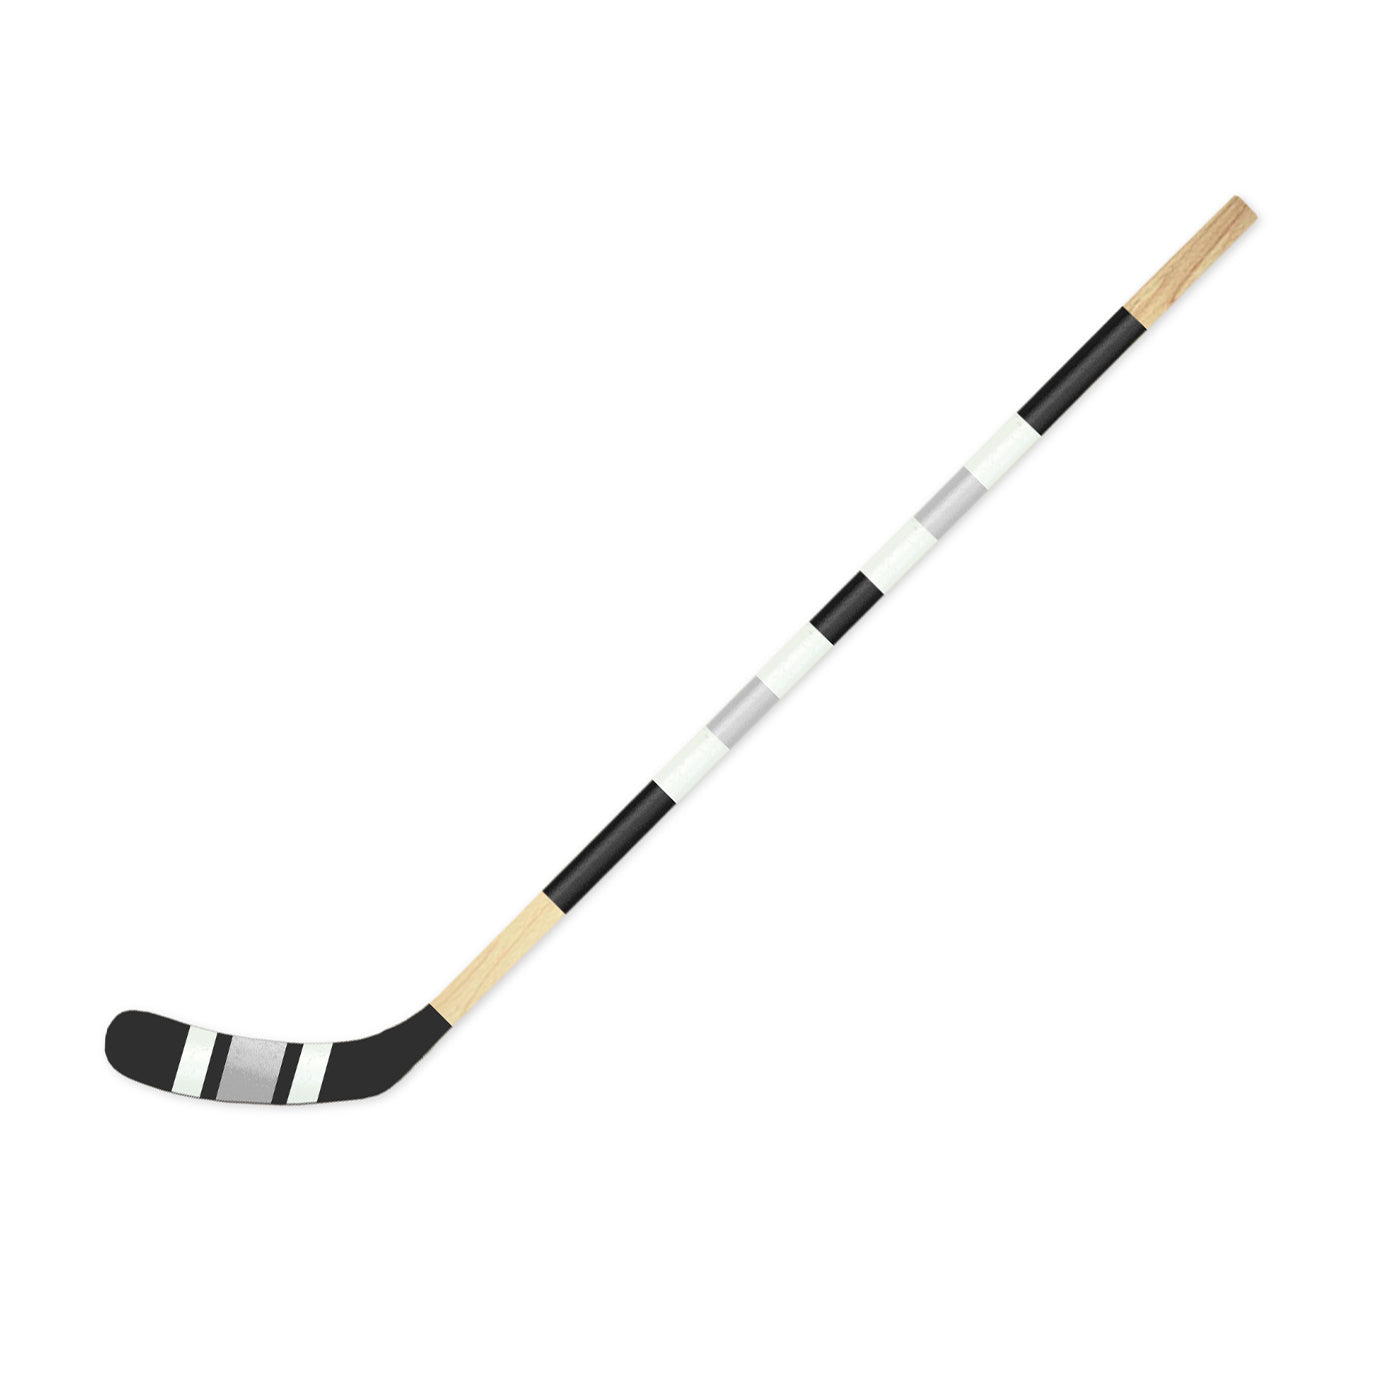 No. 6 Mitchell Hockey Stick